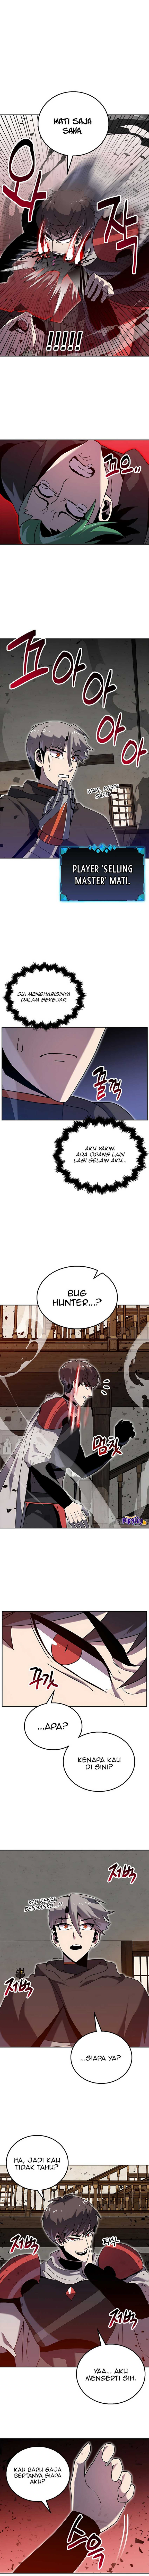 Bug Eater (Bug Hunter) Chapter 10